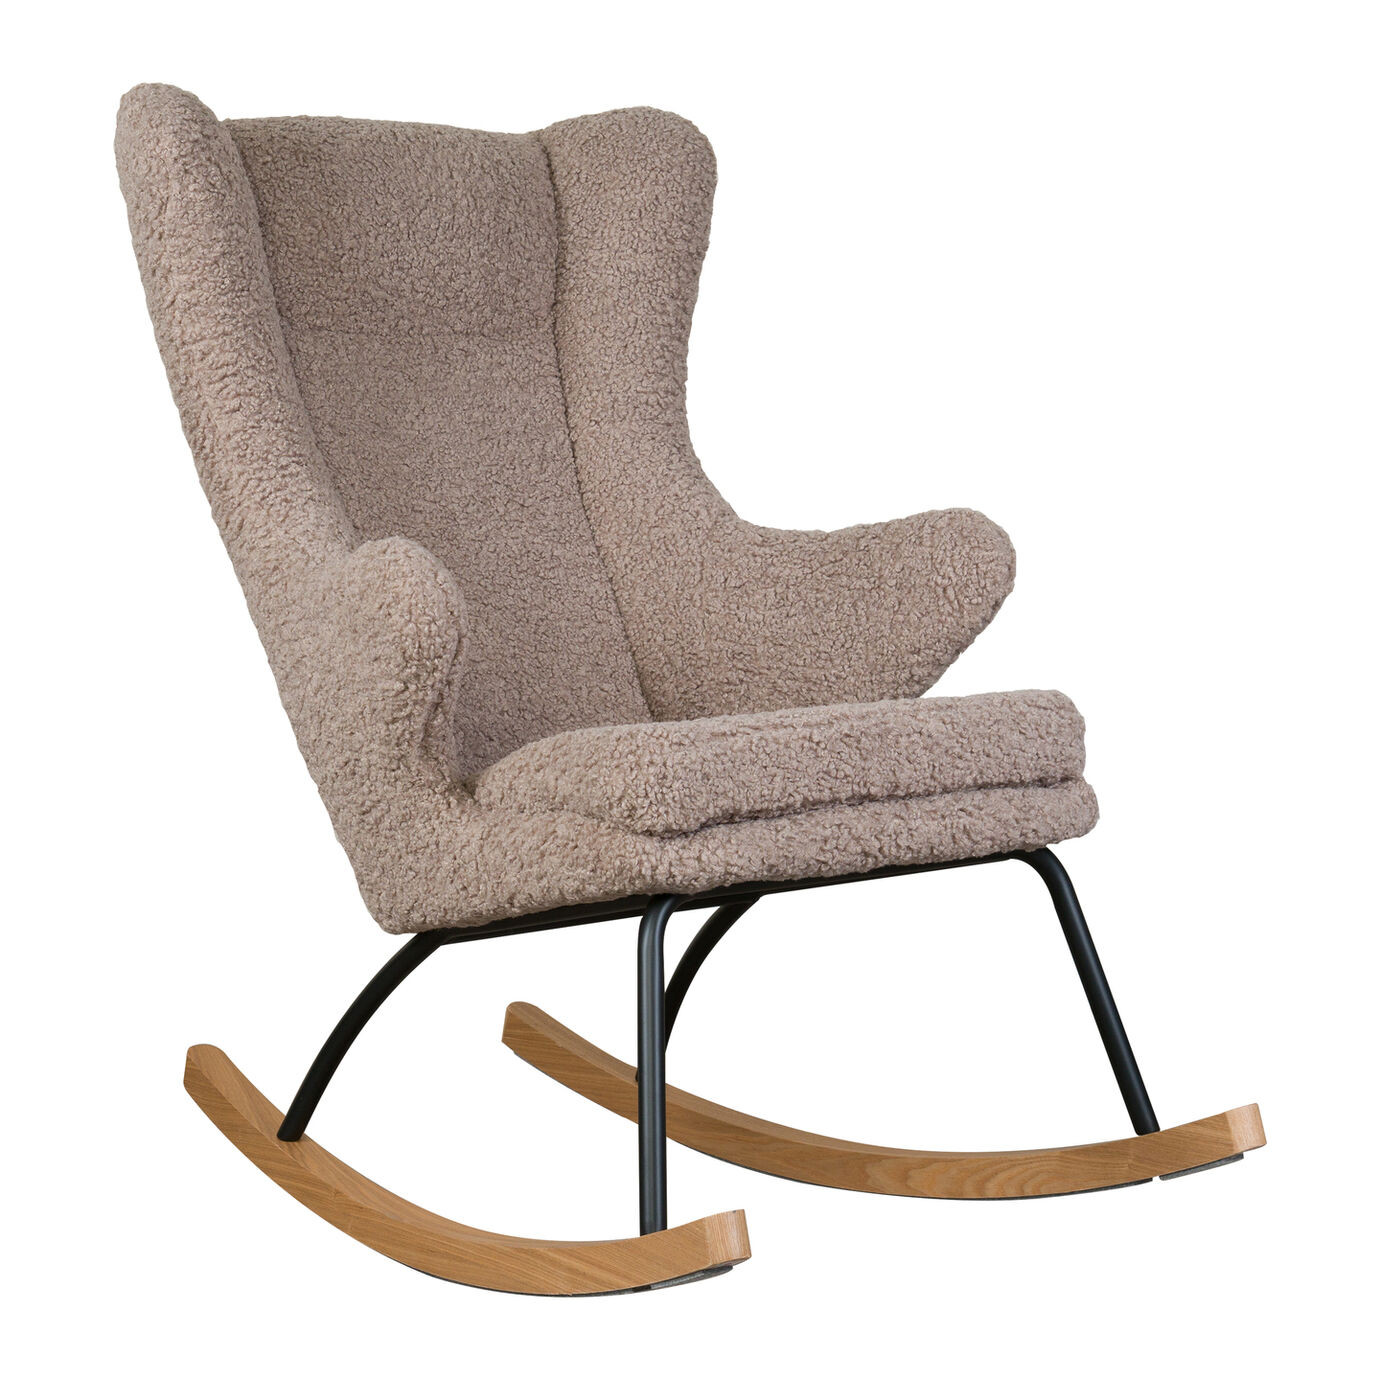 Stone - Rocking Chair De Luxe